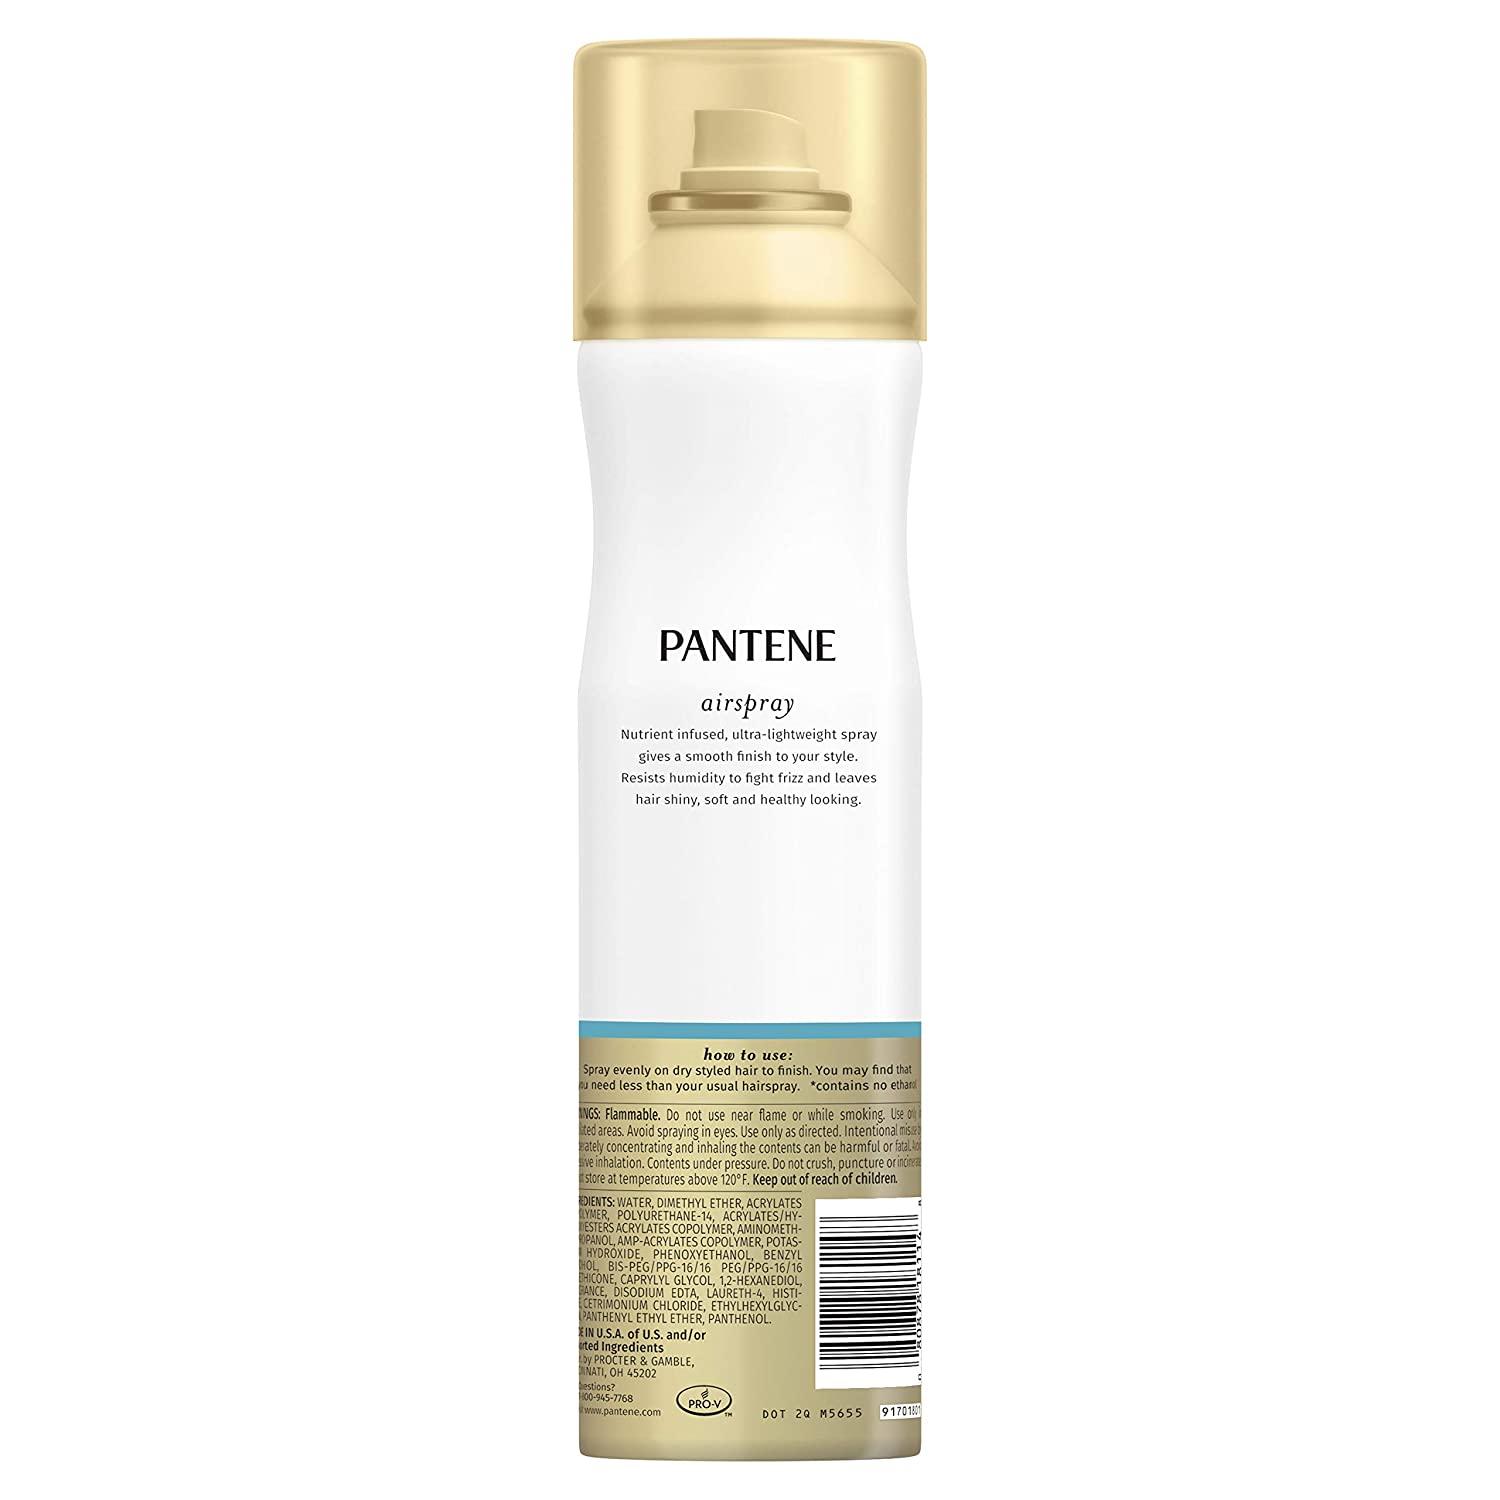 Pantene Pro-V Smooth Airspray Humidity Resistant Smooth Finish Hairspray, 7 oz